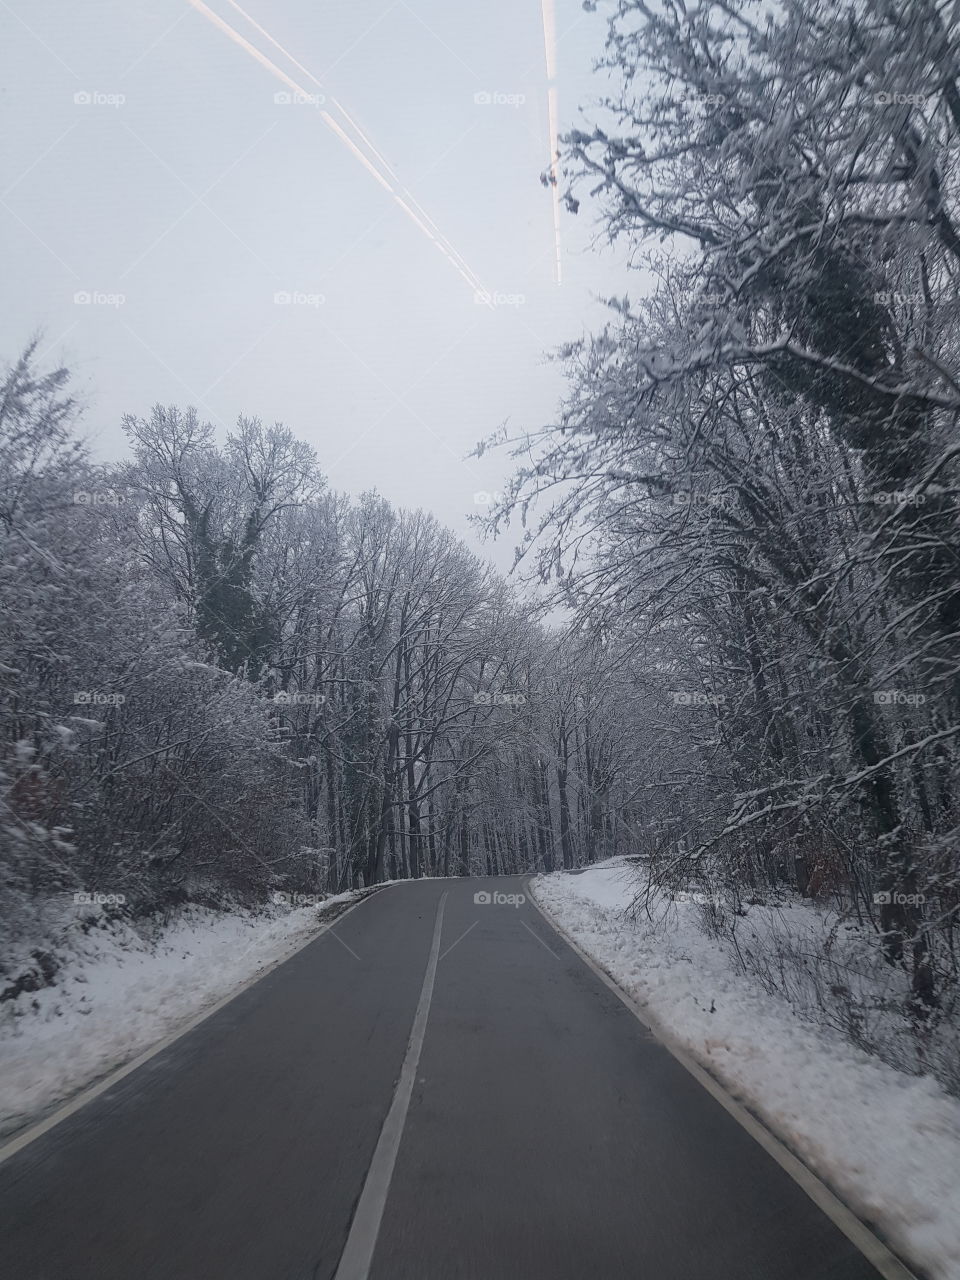 road in snowy forrest